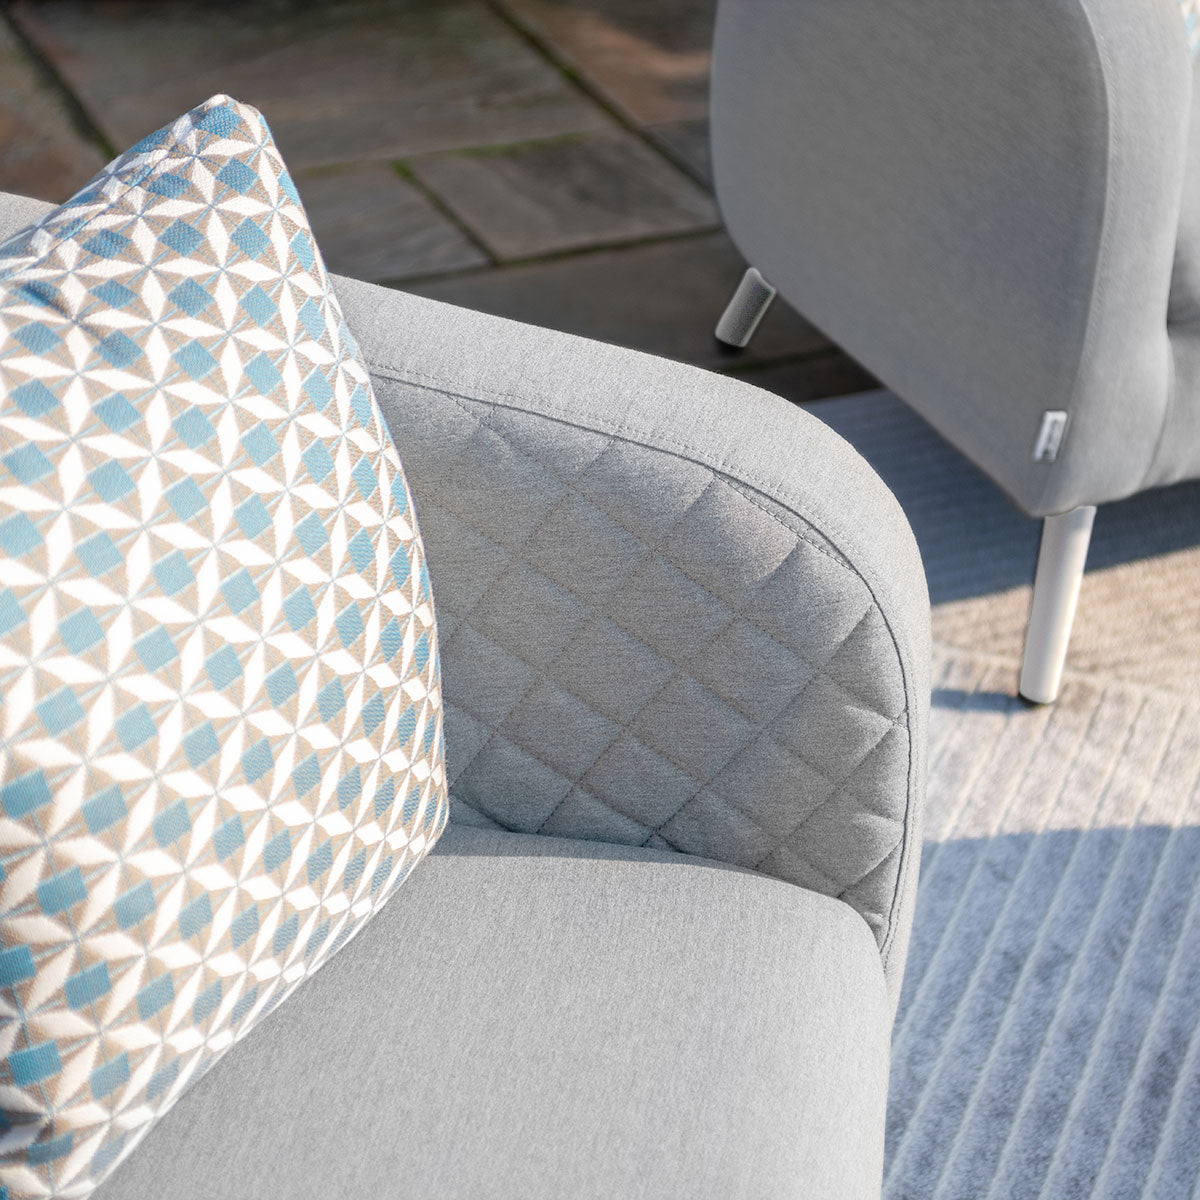 Outdoor Fabric Ambition 2 Seat Sofa Set